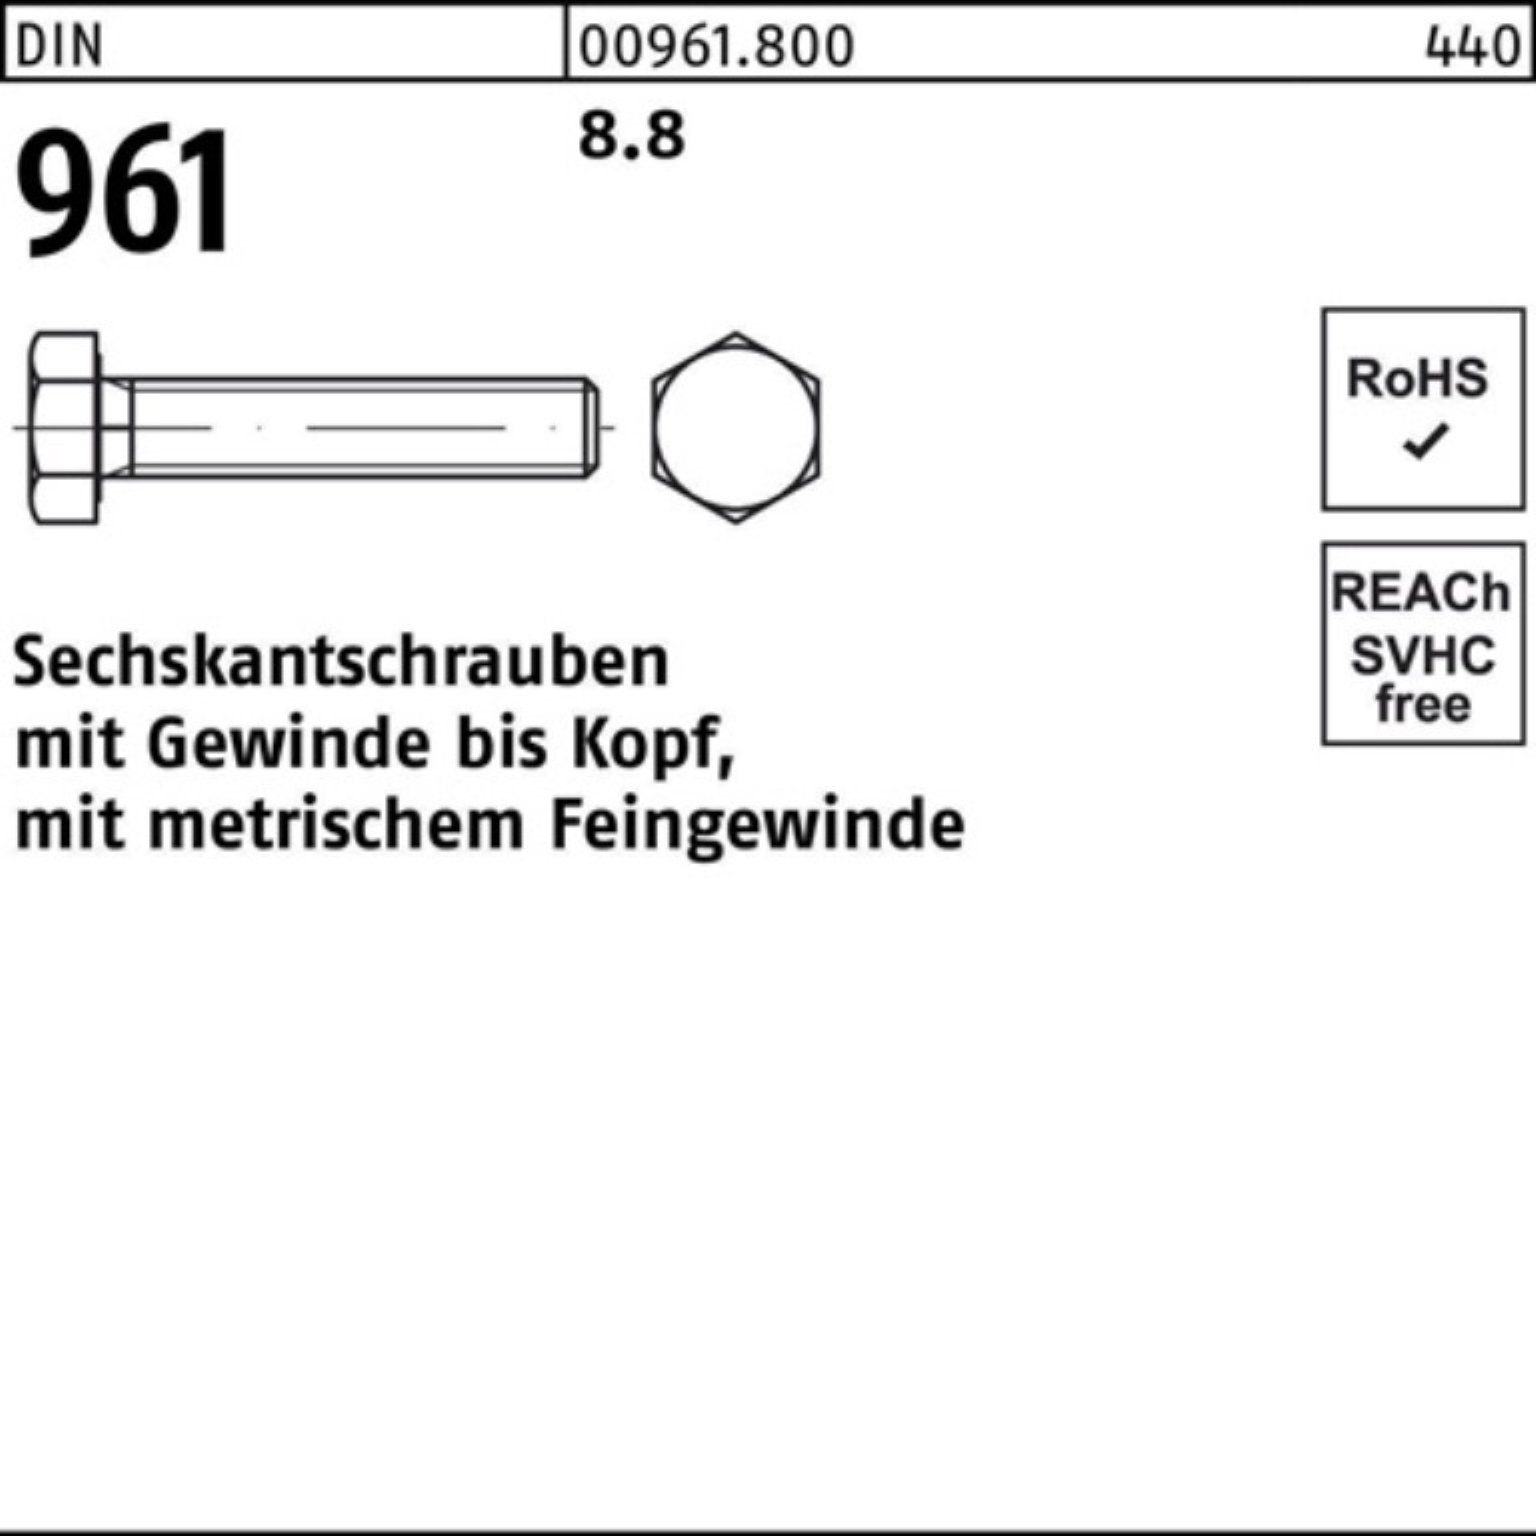 VG M12x1,25x 35 8.8 Sechskantschraube Pack Reyher DIN Sechskantschraube 100 Stück 961 DI 100er